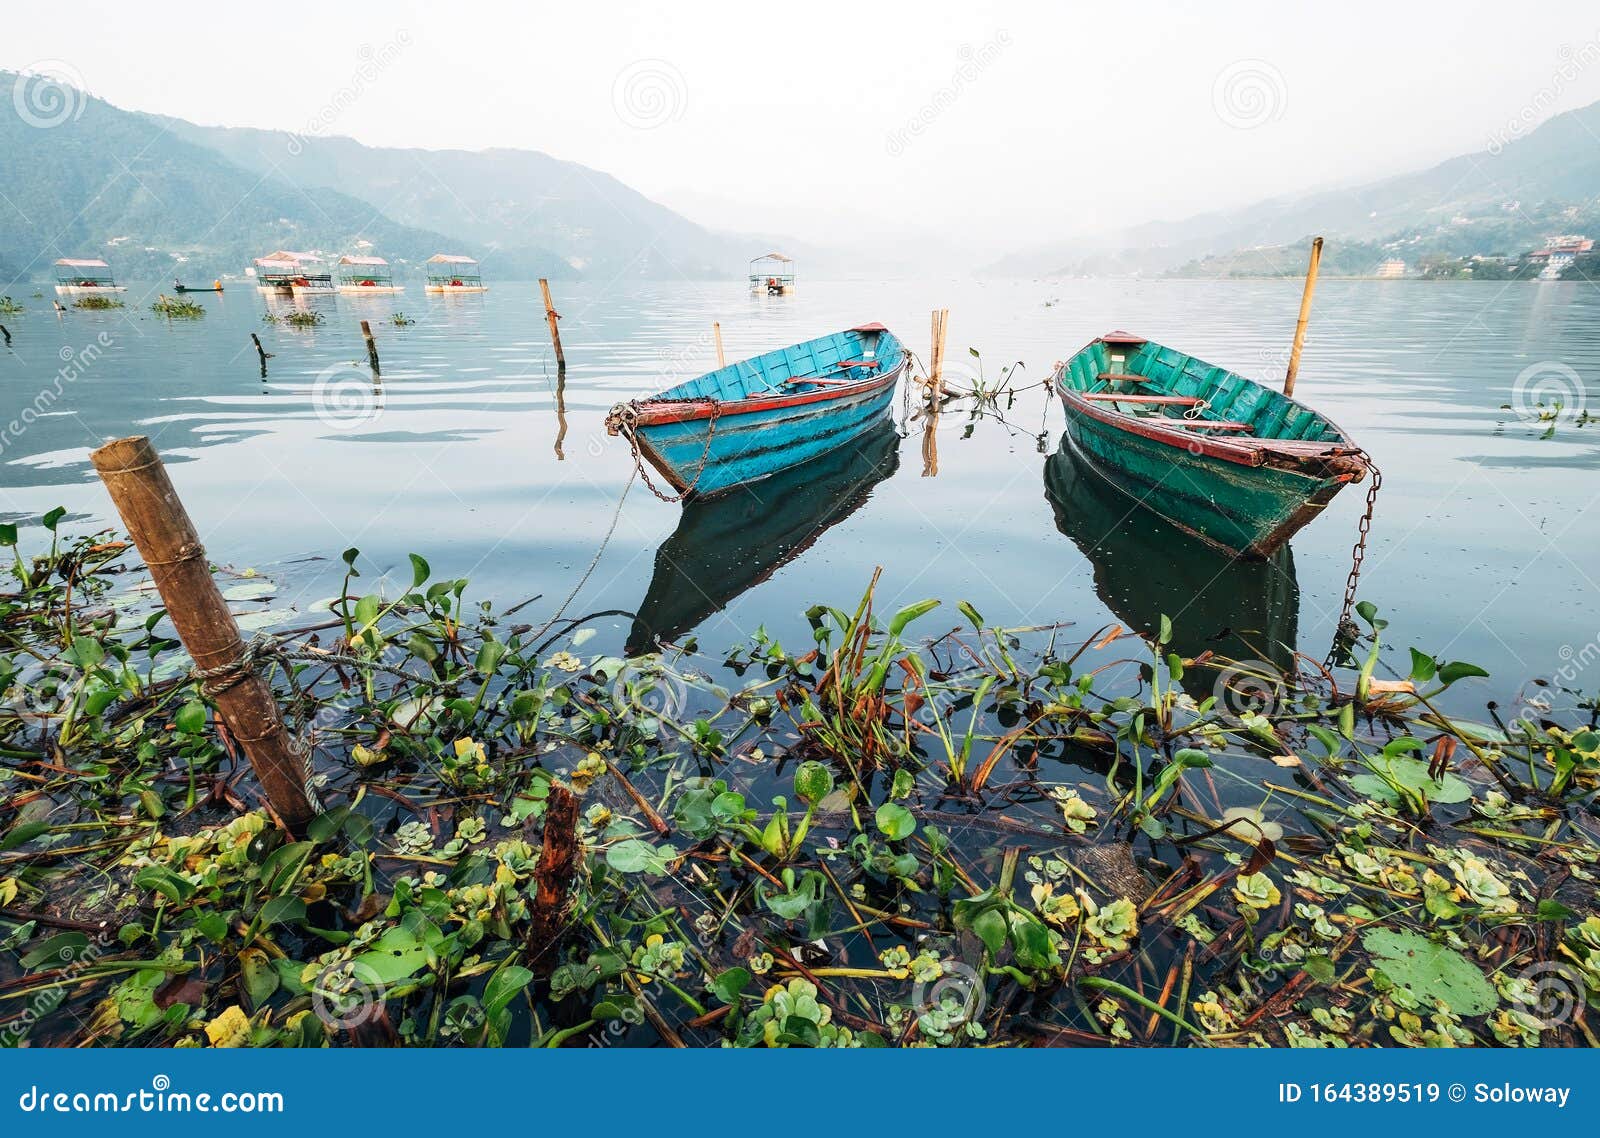 multicolored traditional rowboats on the morning lake water at lakeside in pokhara, gandaki pradesh, nepal. asian traveling